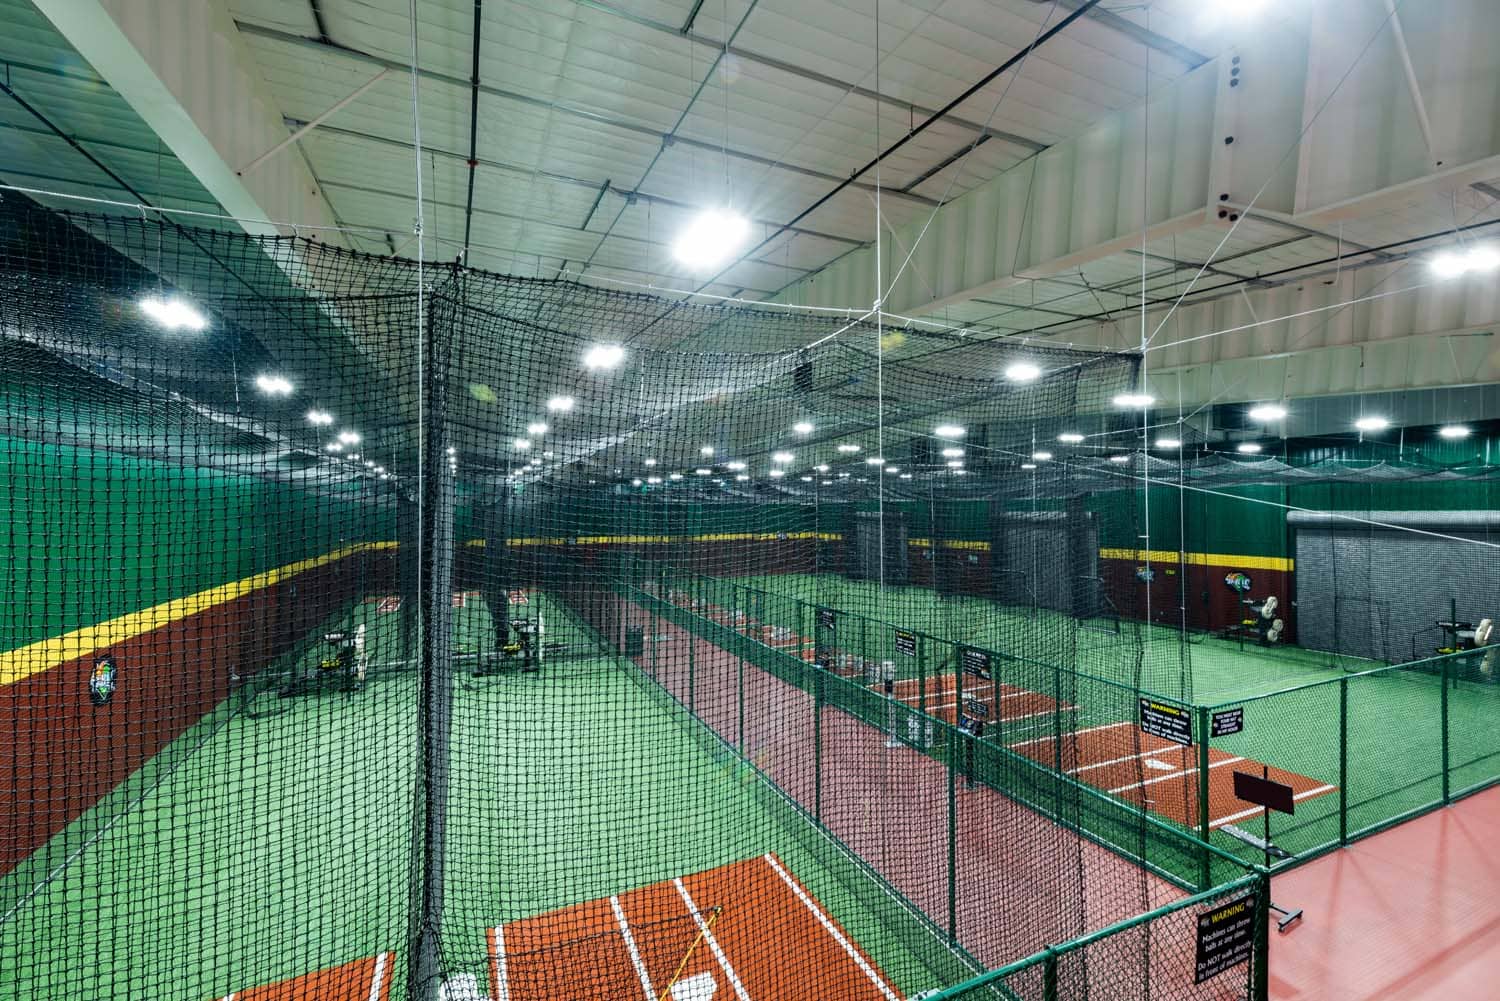 Baseball training facility in windsor, colorado